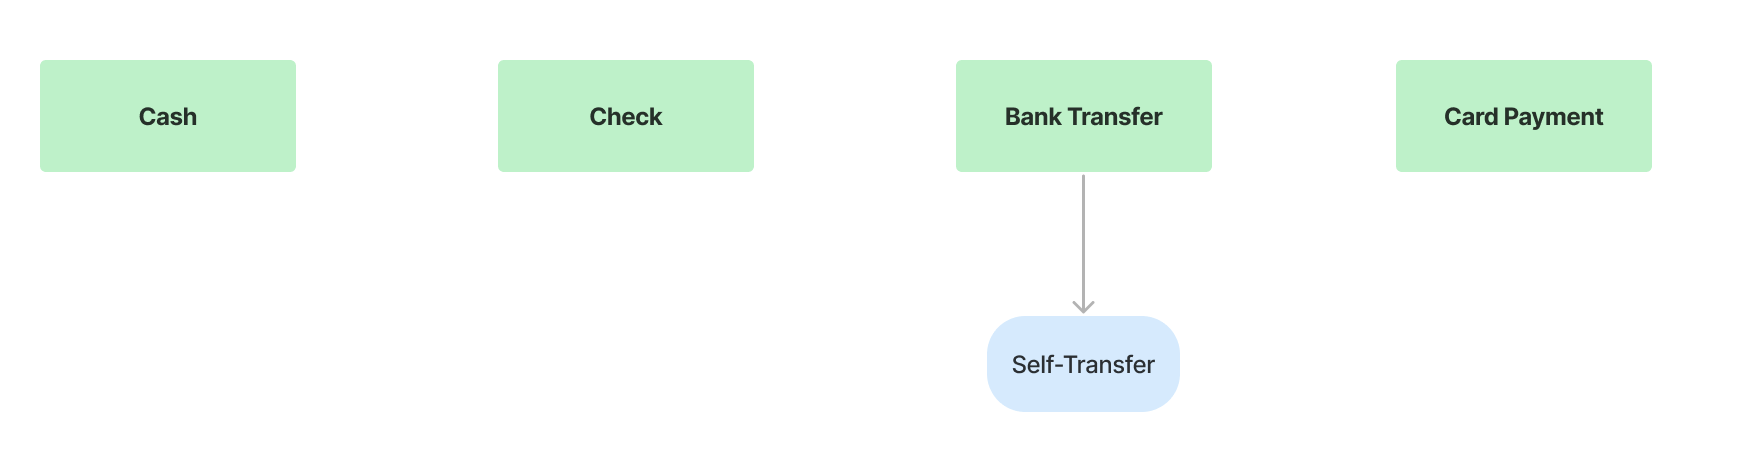 Inscribe's Transaction Method Hierarchy